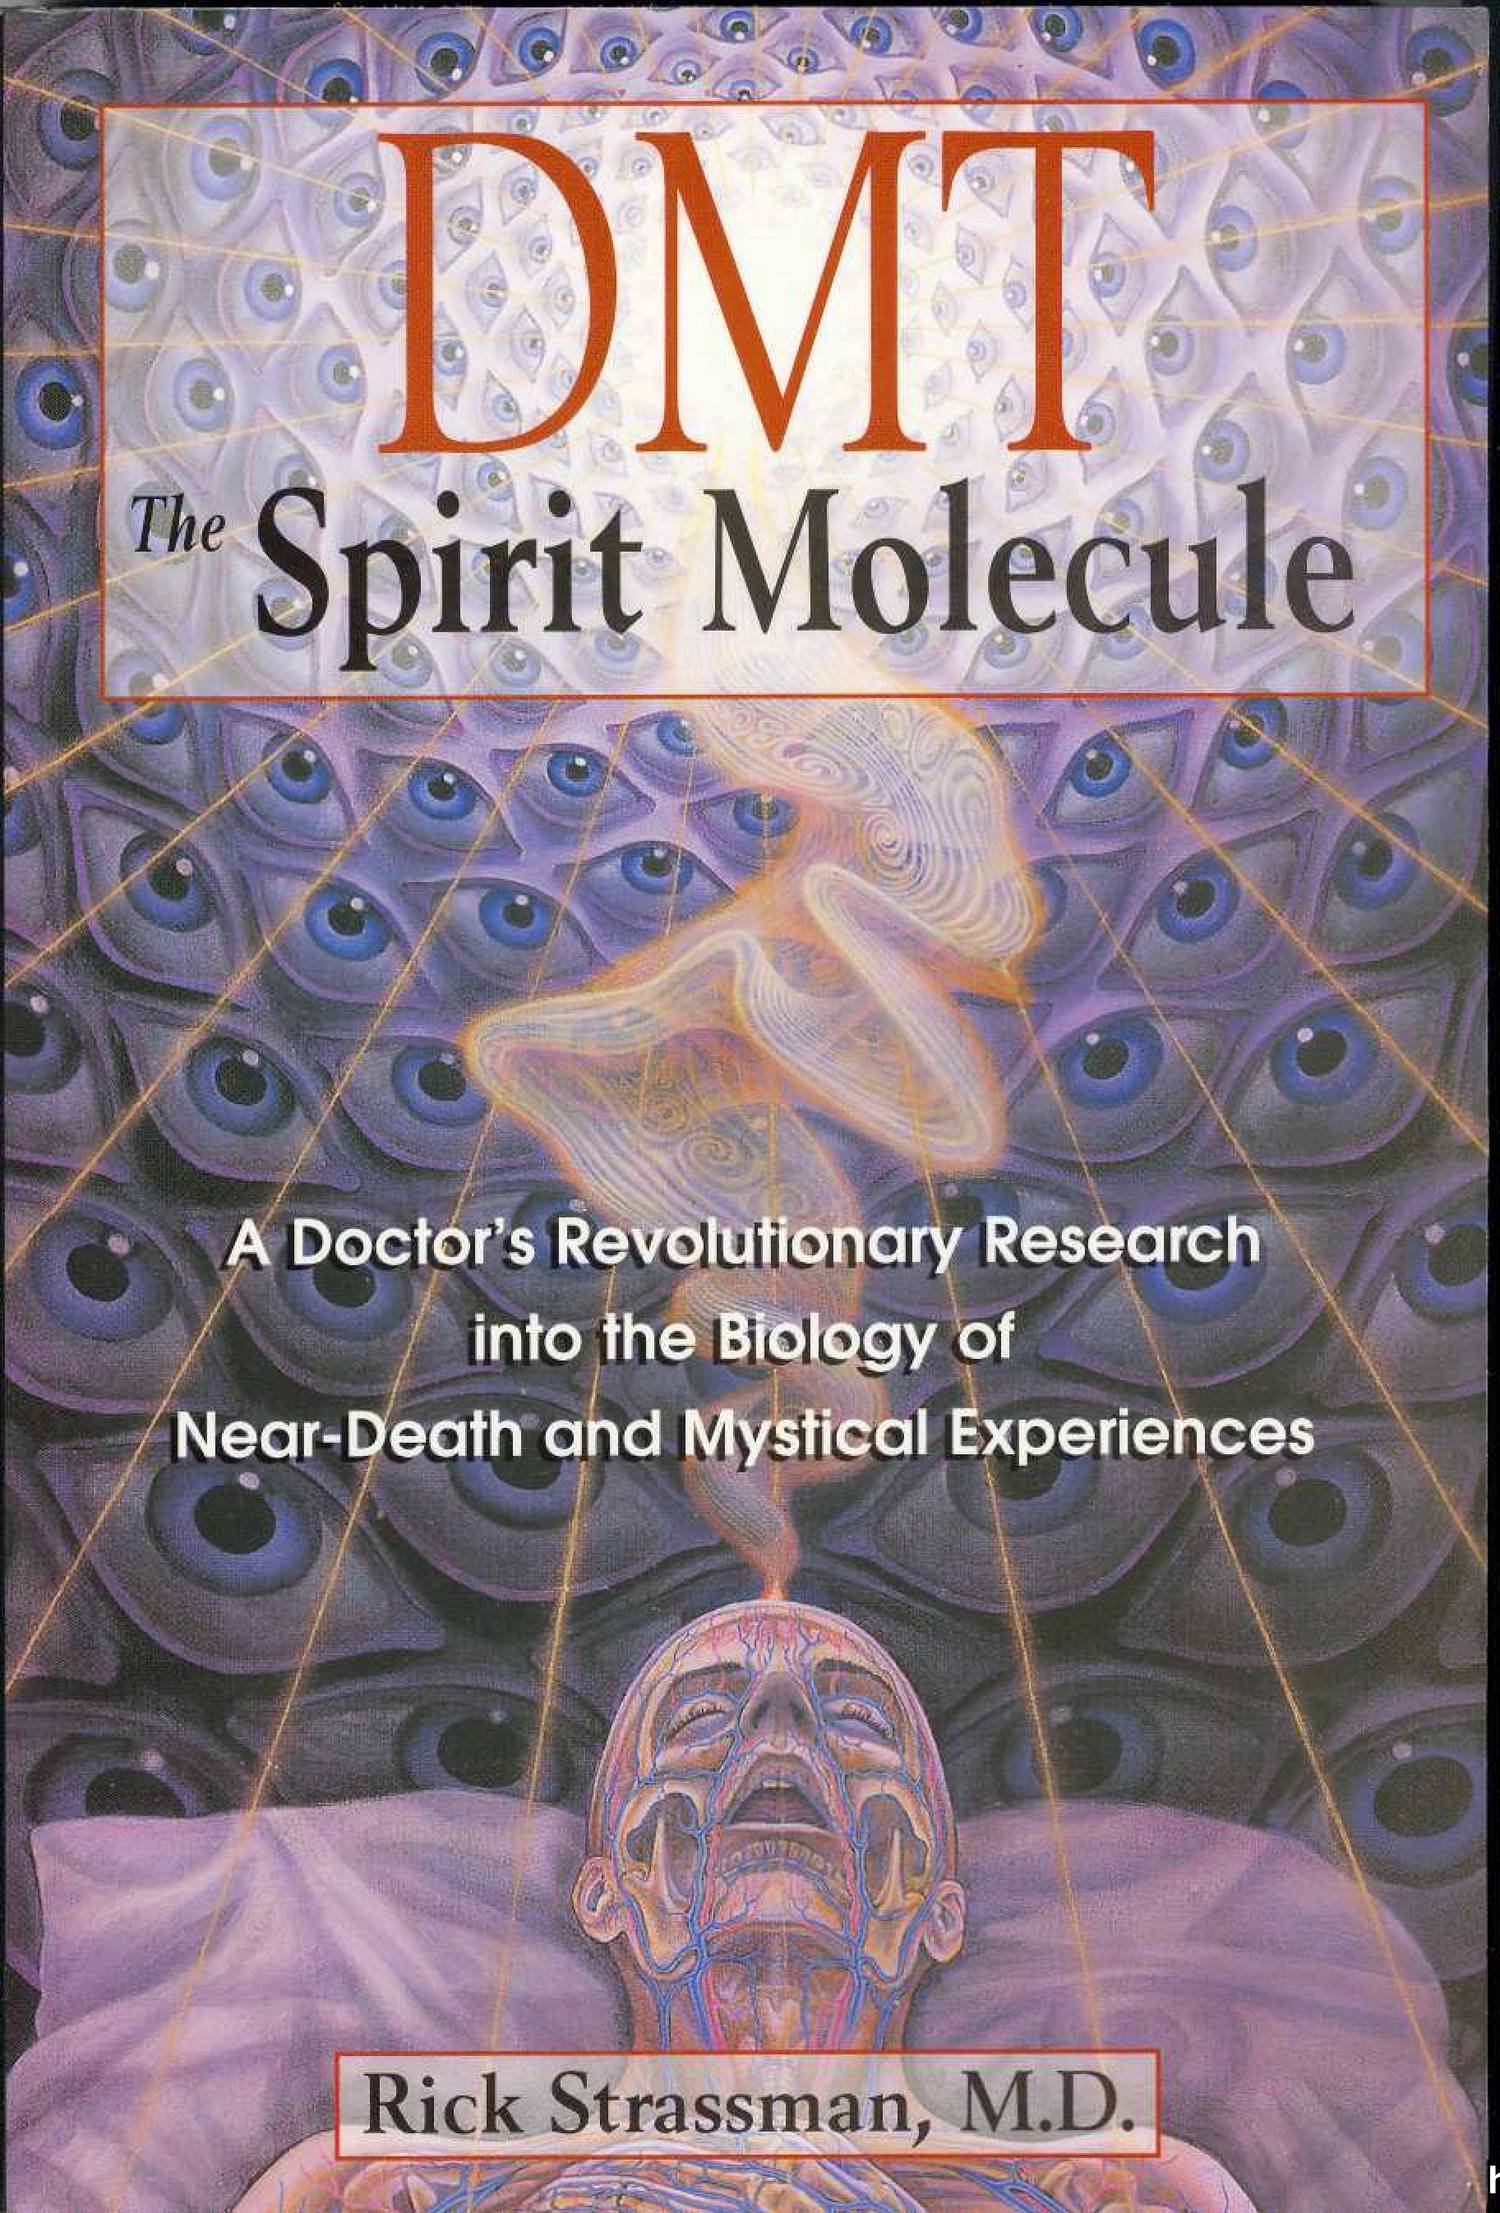 DMT Spirits Molecule - Rick Strassman